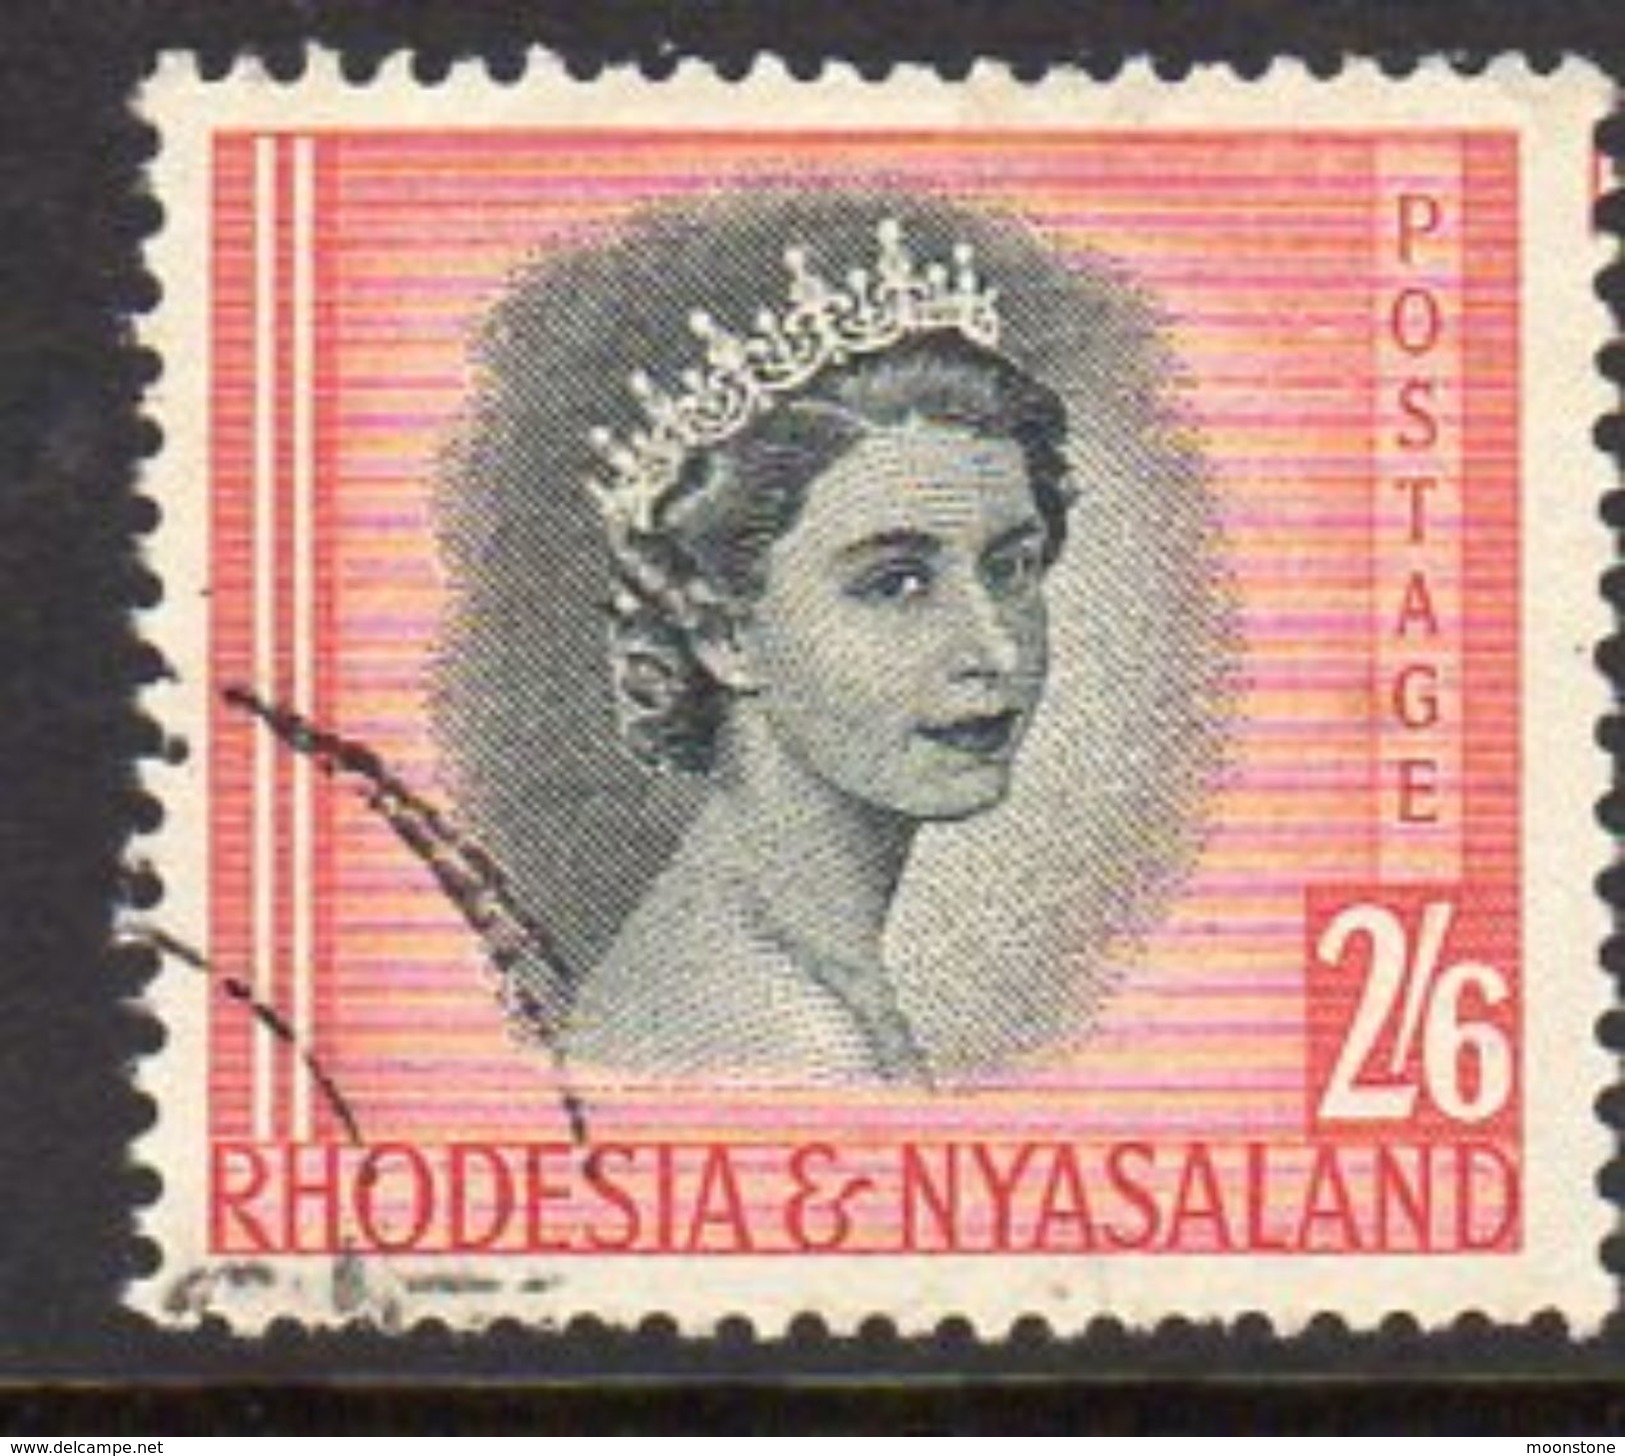 Rhodesia & Nyasaland 1954 2/6d Definitive, Used, SG 12 (BA) - Rhodesia & Nyasaland (1954-1963)